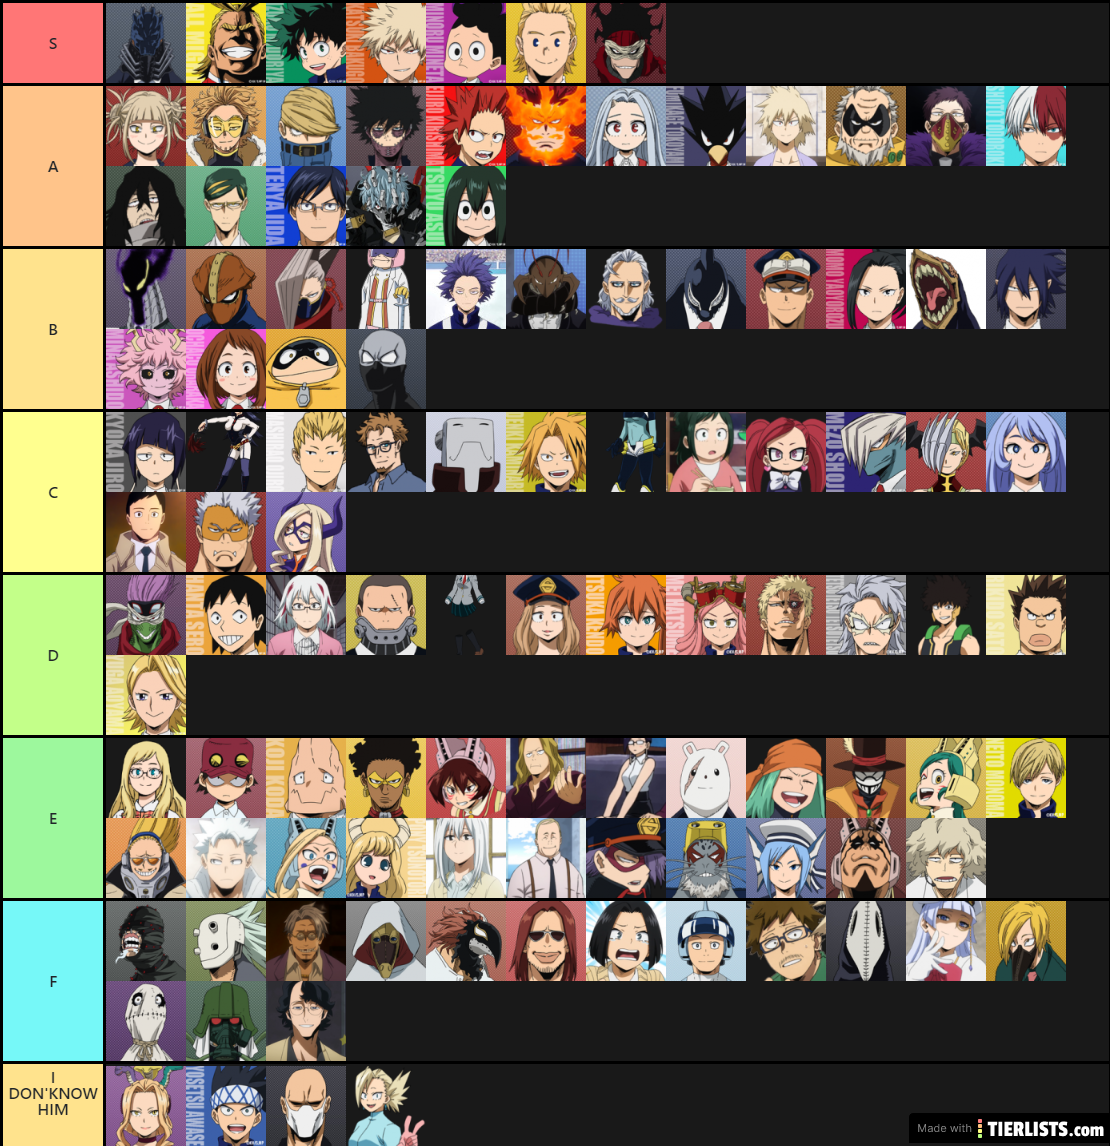 My tier list of MHA characters